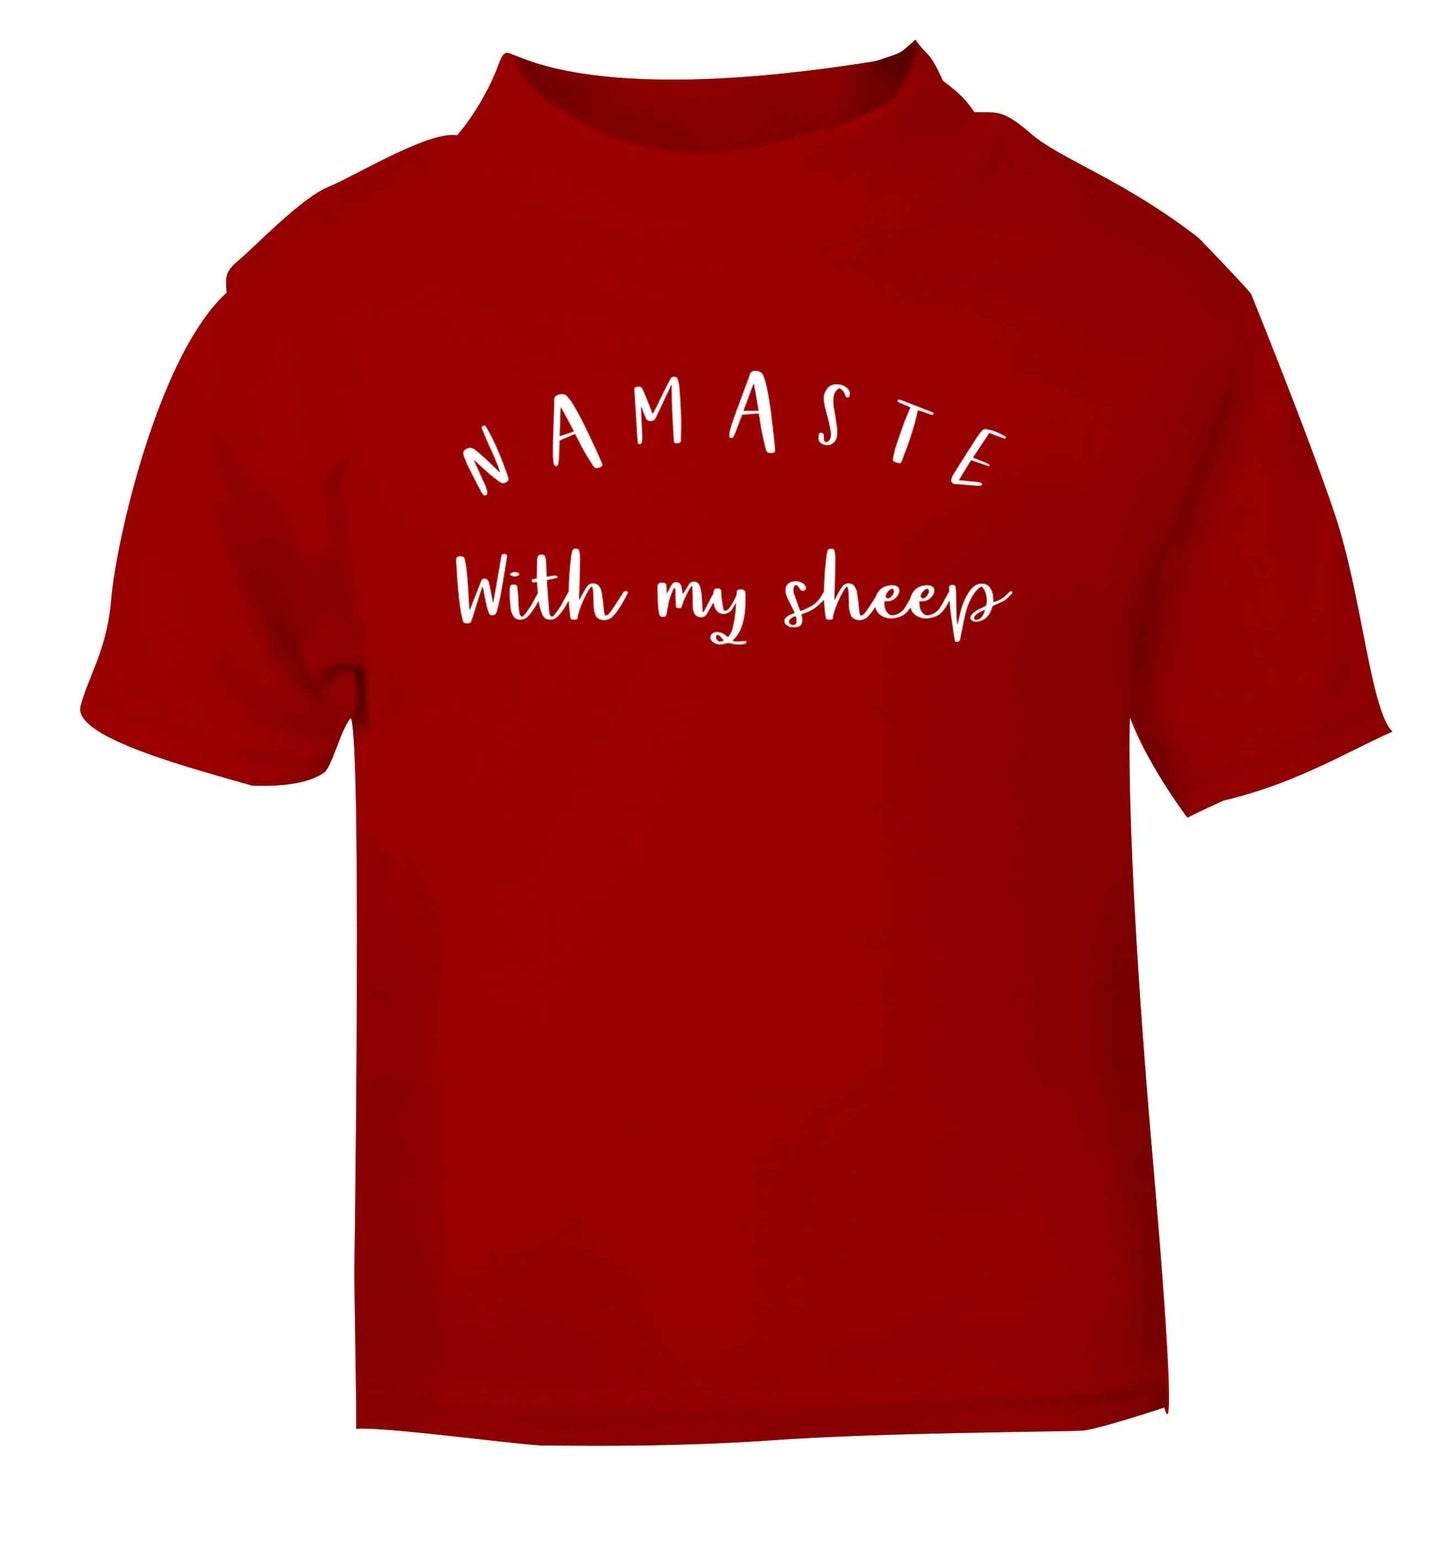 Namaste with my sheep red Baby Toddler Tshirt 2 Years